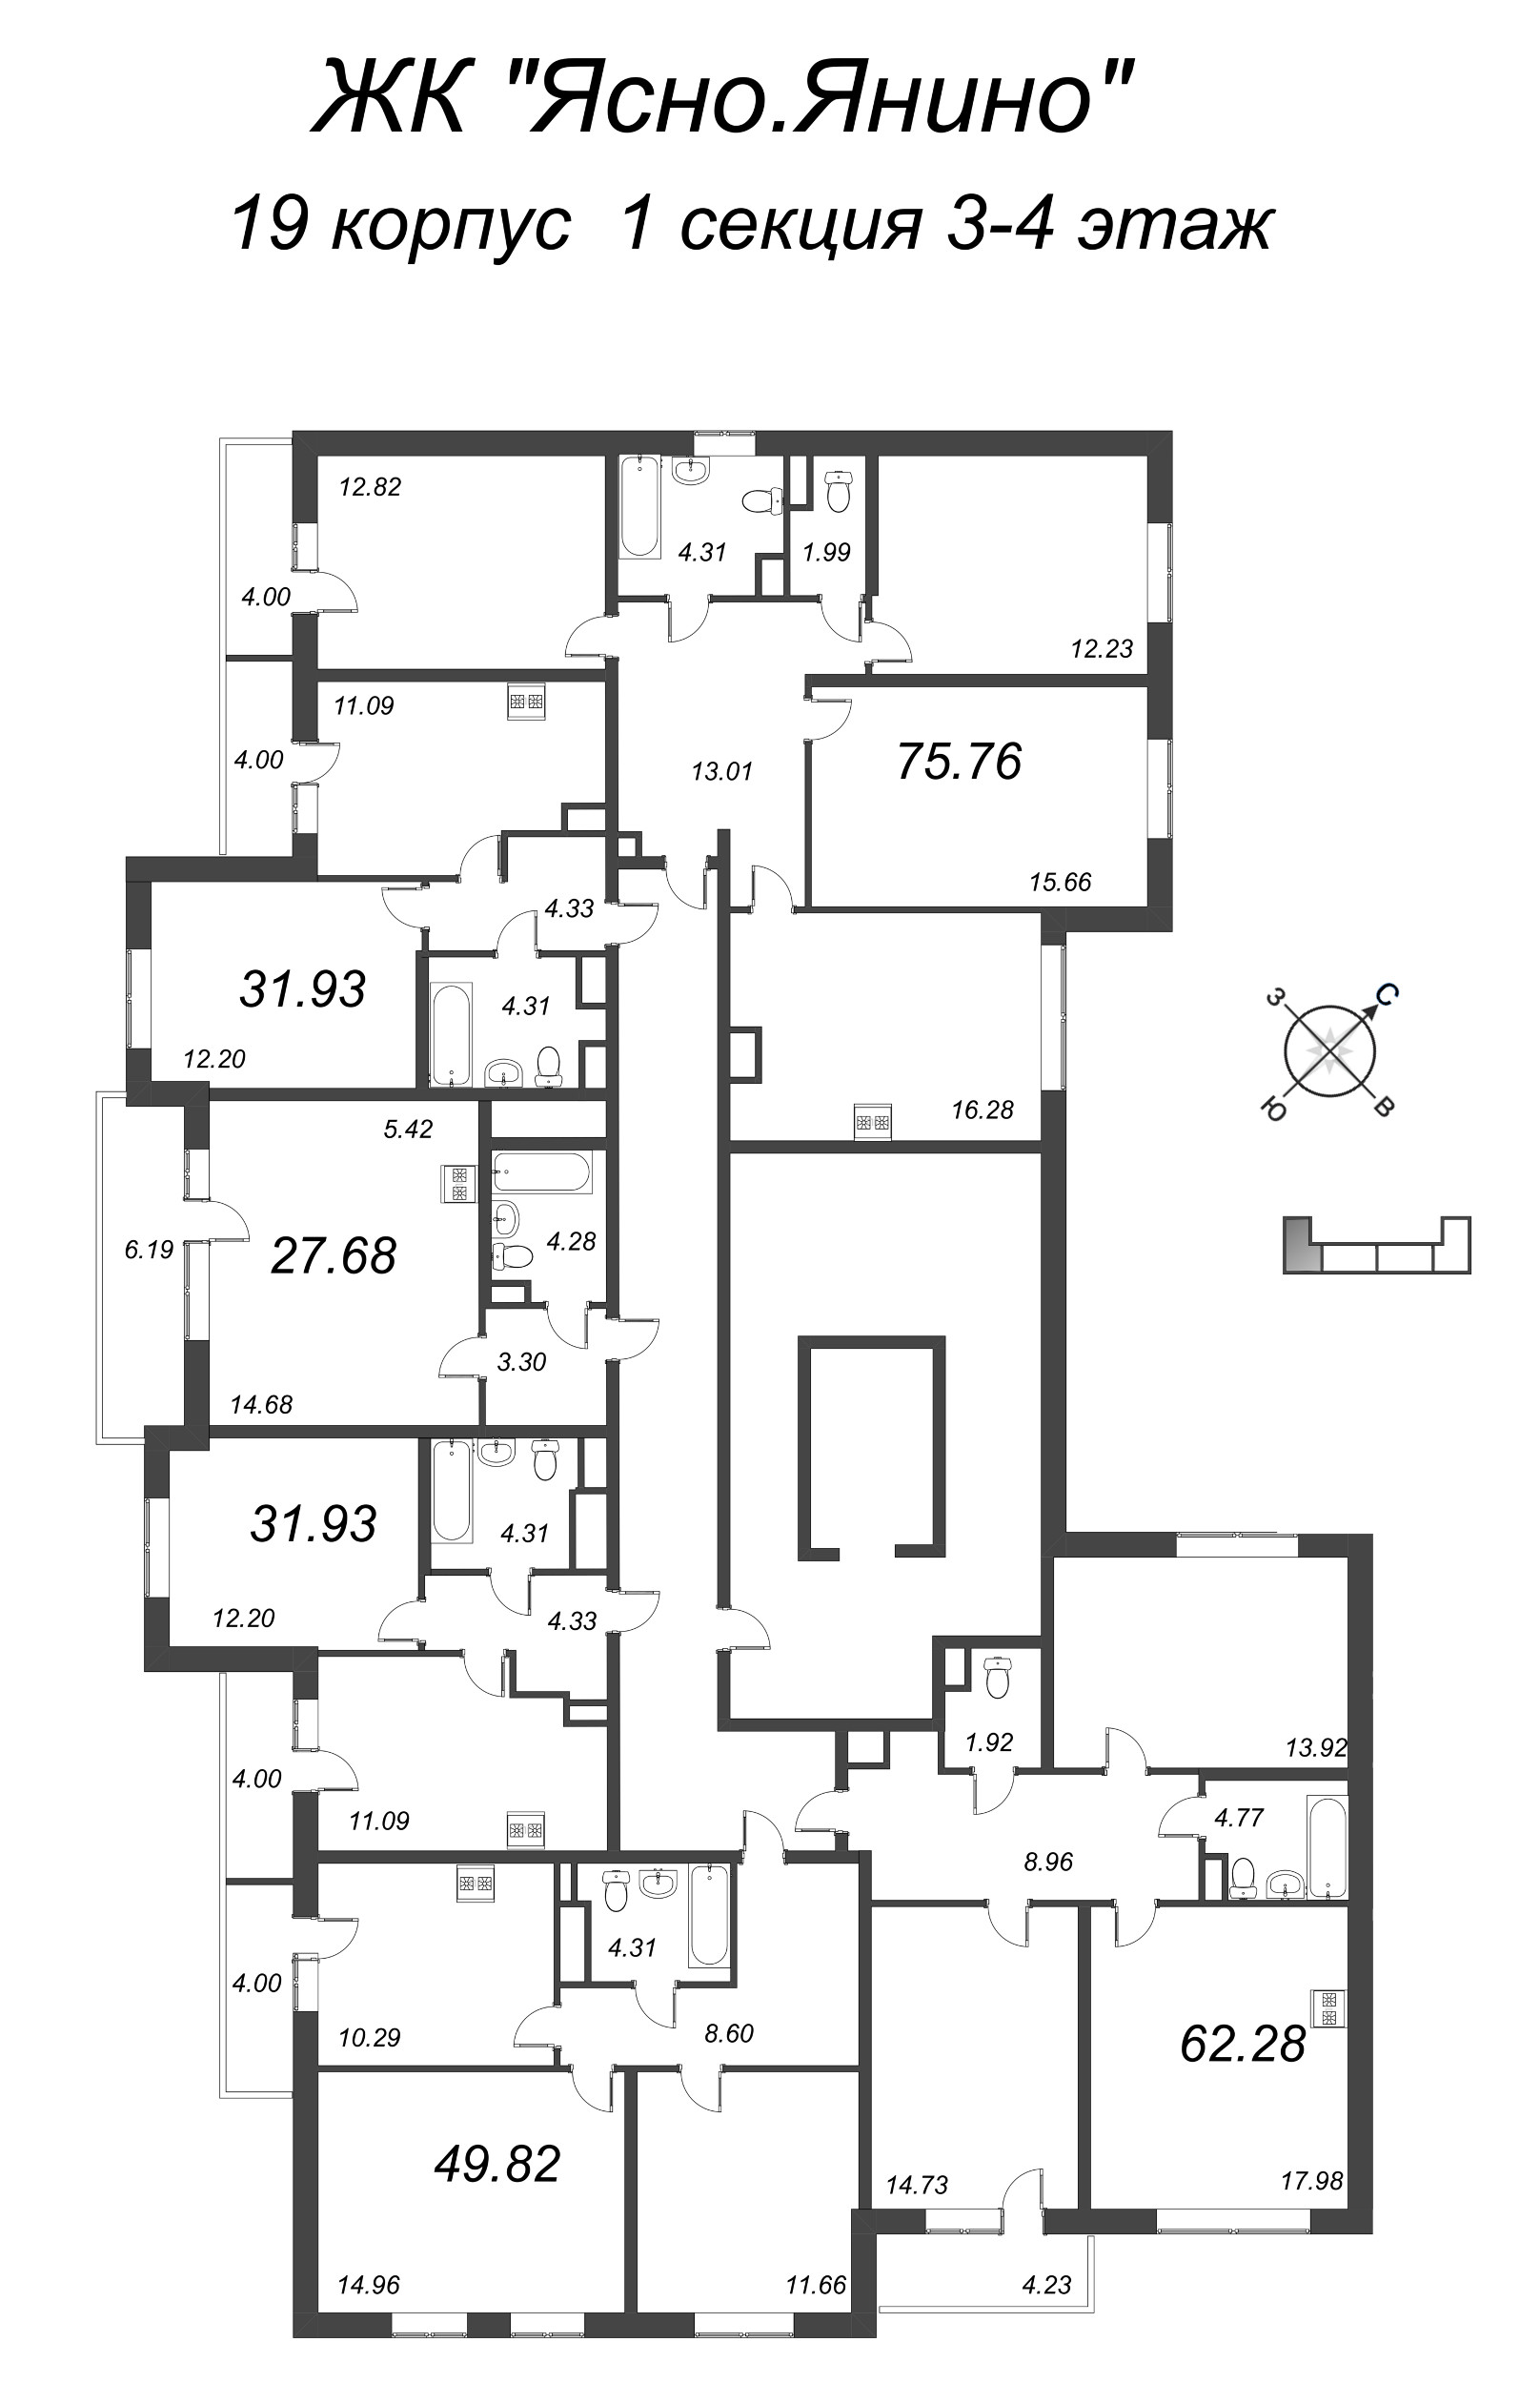 4-комнатная (Евро) квартира, 75.76 м² в ЖК "Ясно.Янино" - планировка этажа